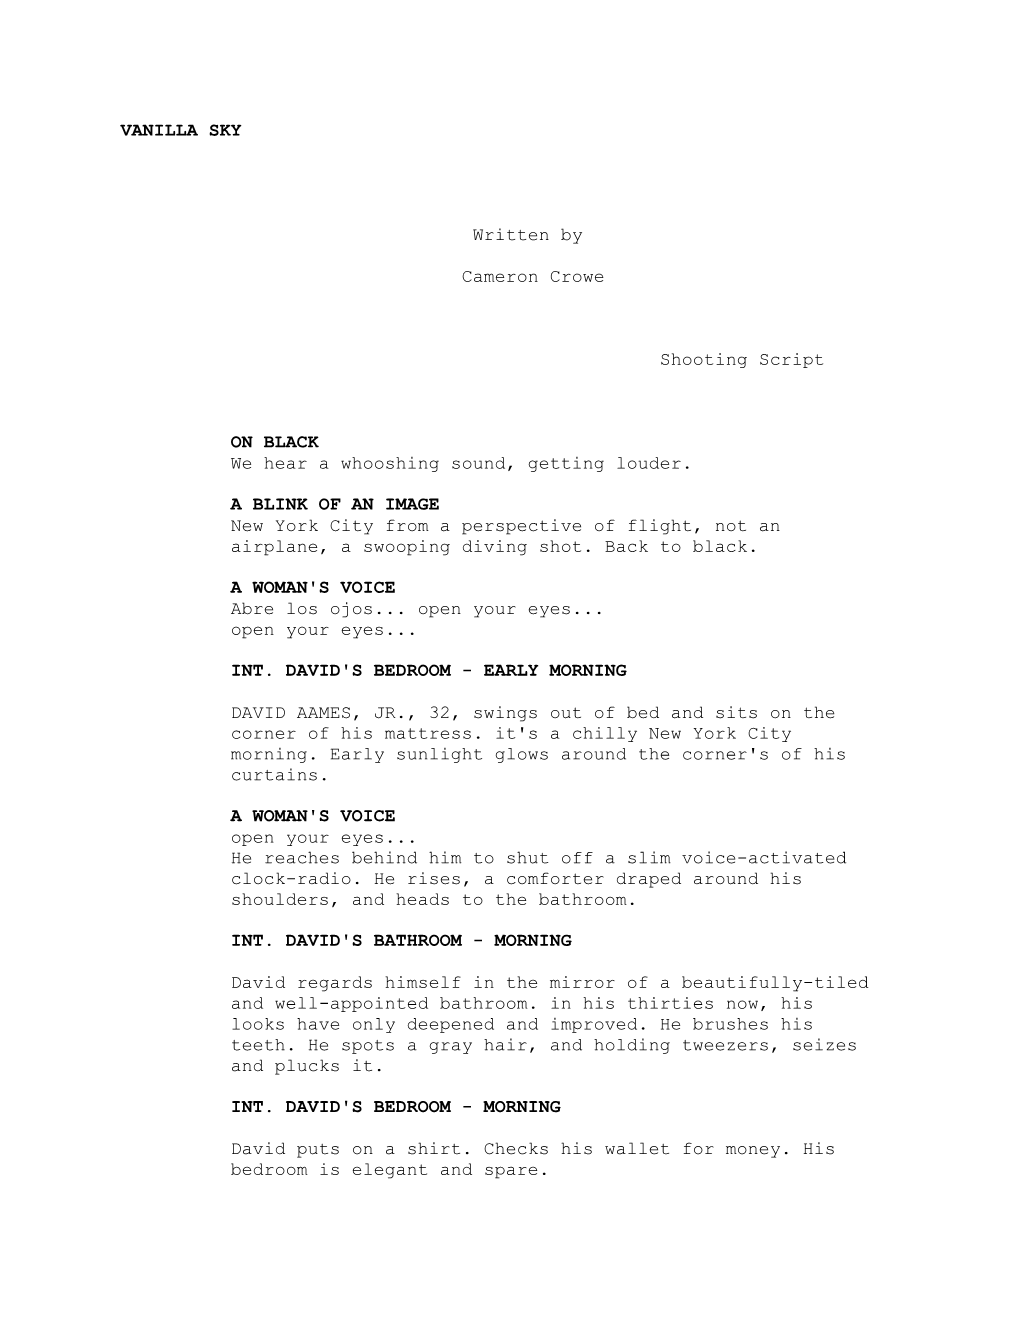 VANILLA SKY Written by Cameron Crowe Shooting Script on BLACK